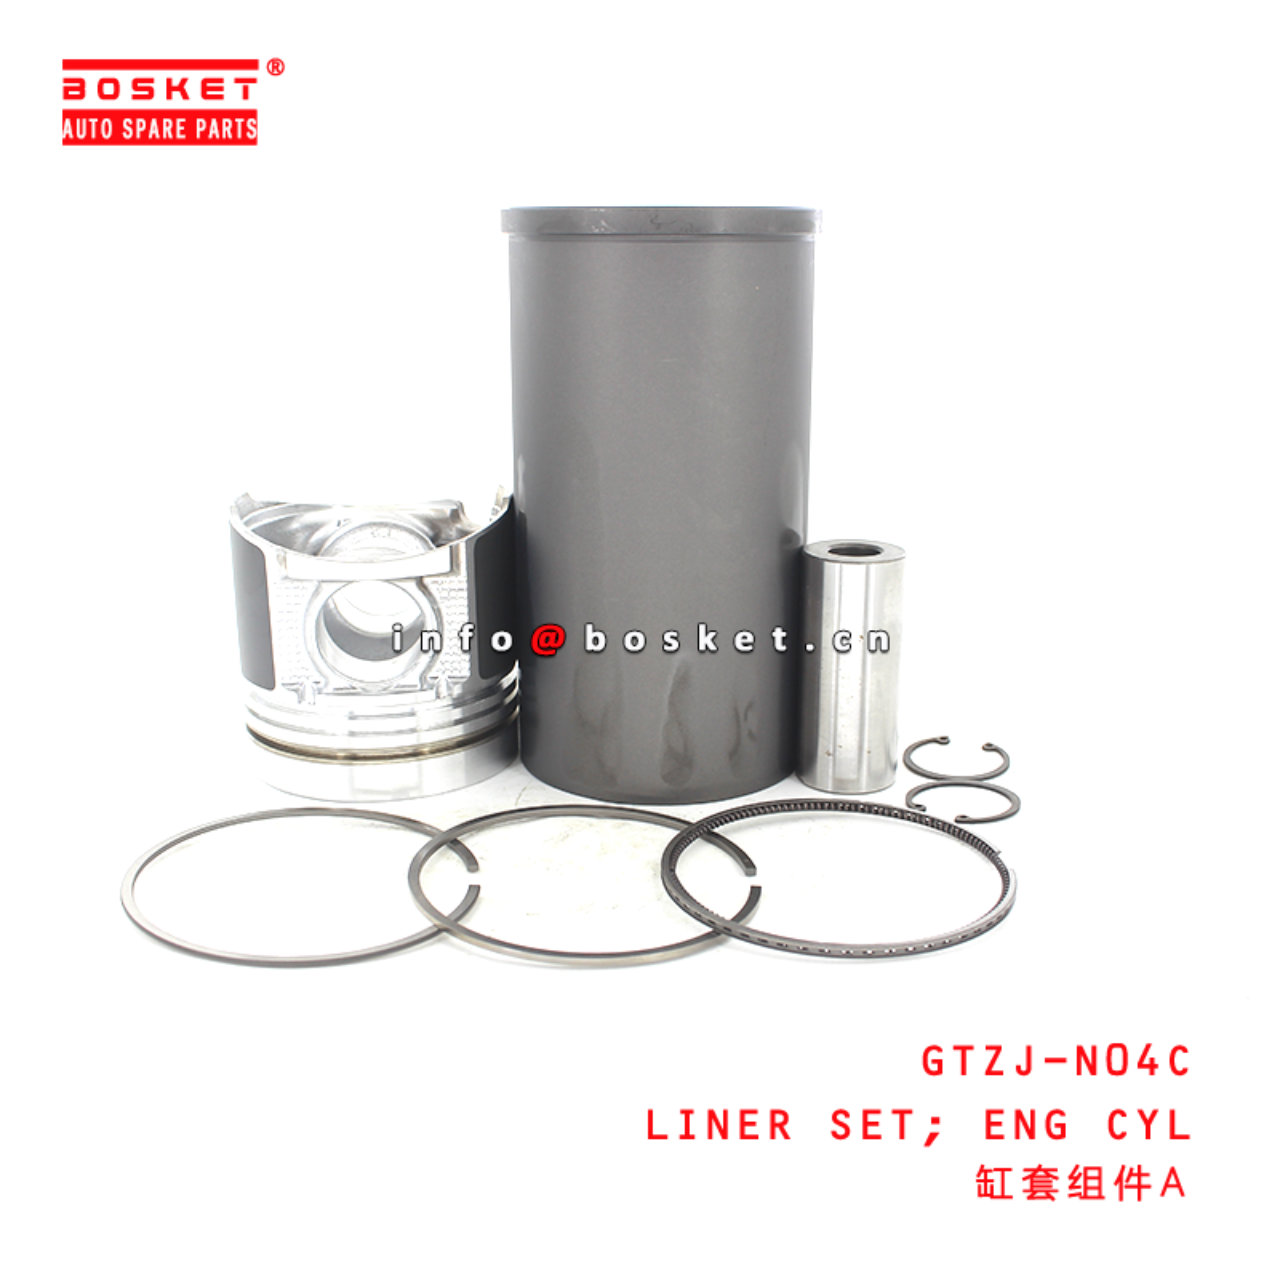 GTZJ-N04C Engine Cylinder Liner Set Suitable for ISUZU HINO300 N04C